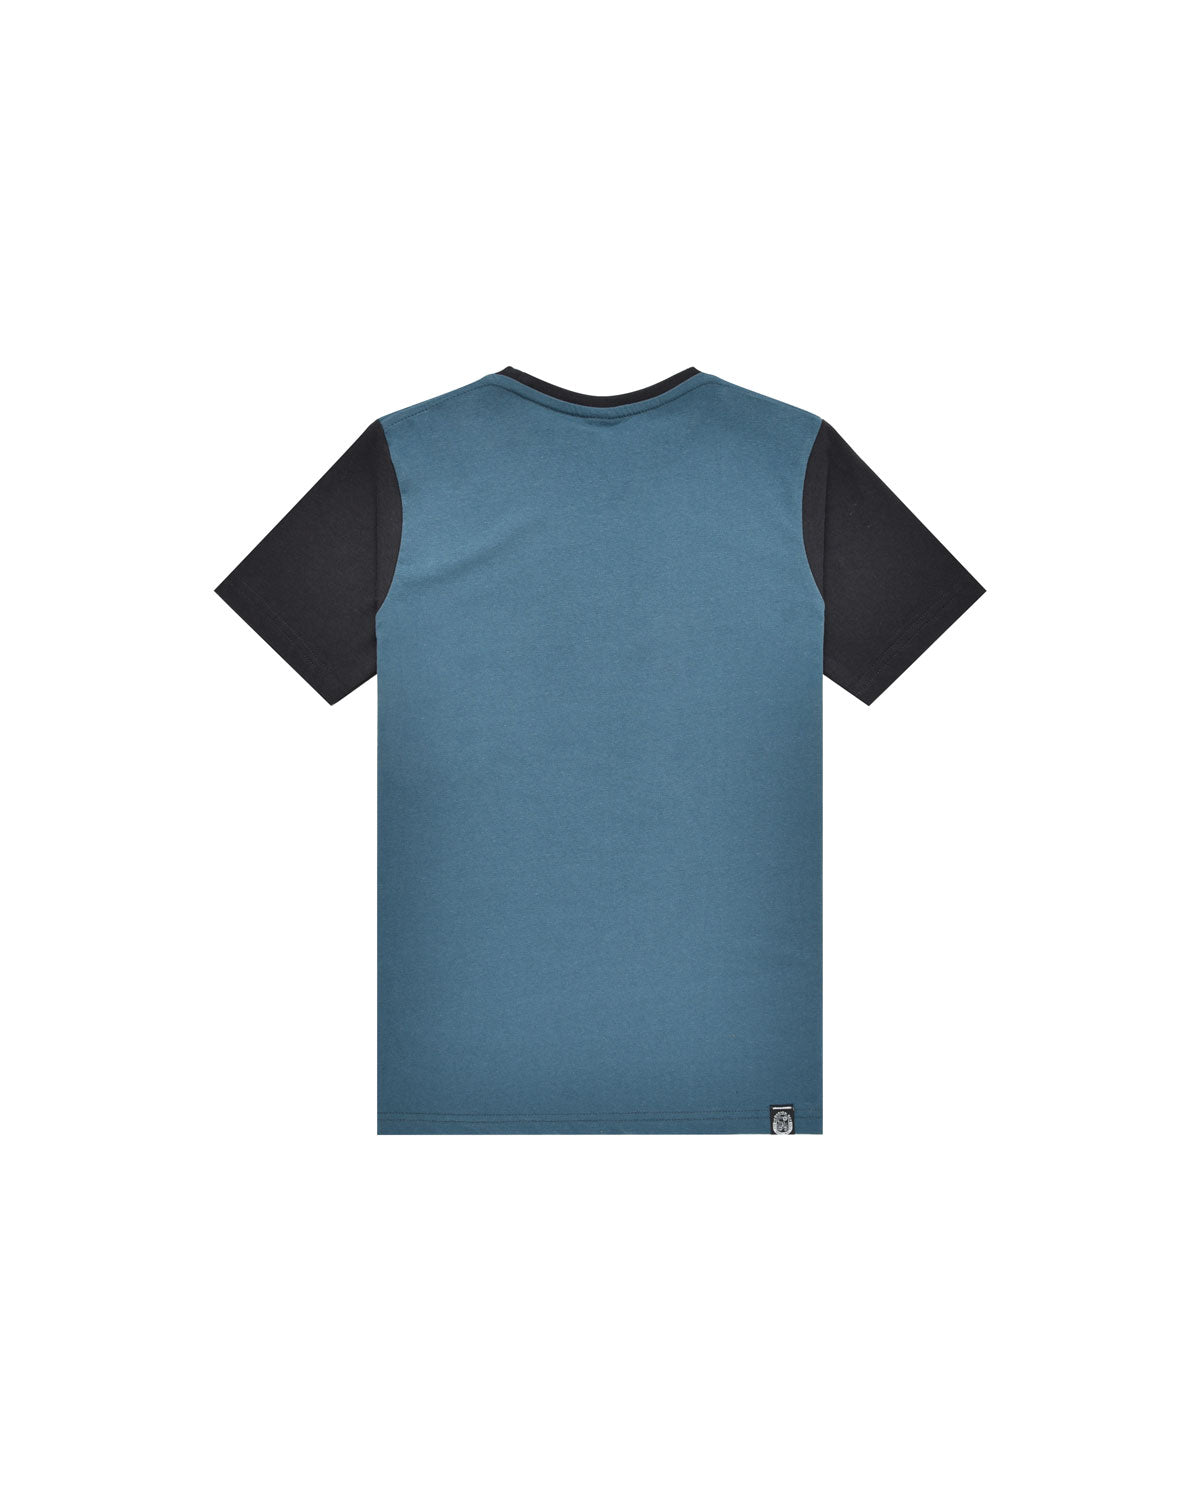 Bambino | T-Shirt 100% Cotone Color Petrolio Con Stampa "High Voltage"